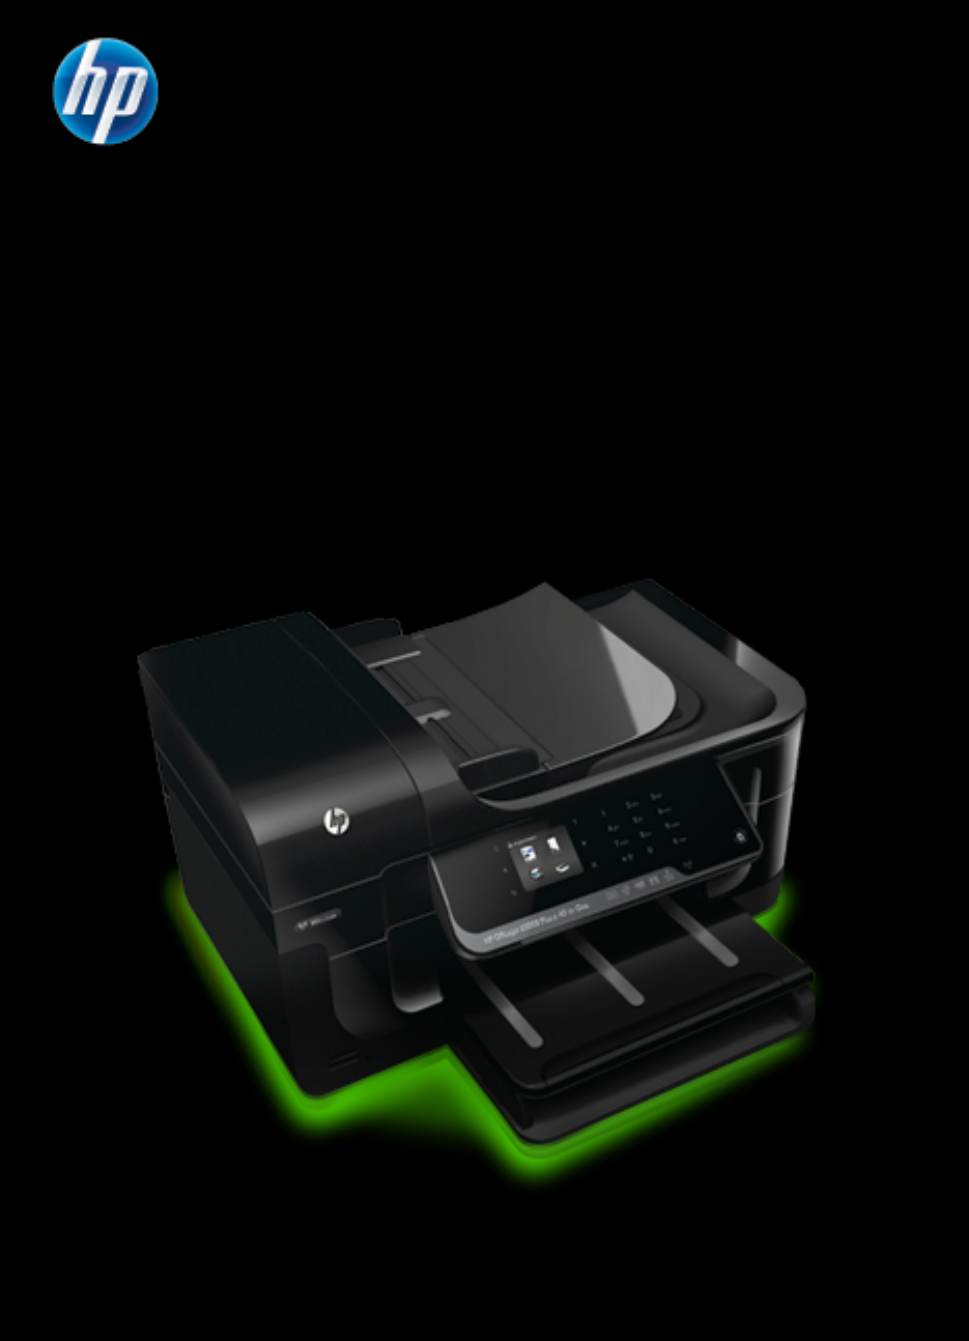 Hp officejet j3608 all in one printer user manual pixma mx472